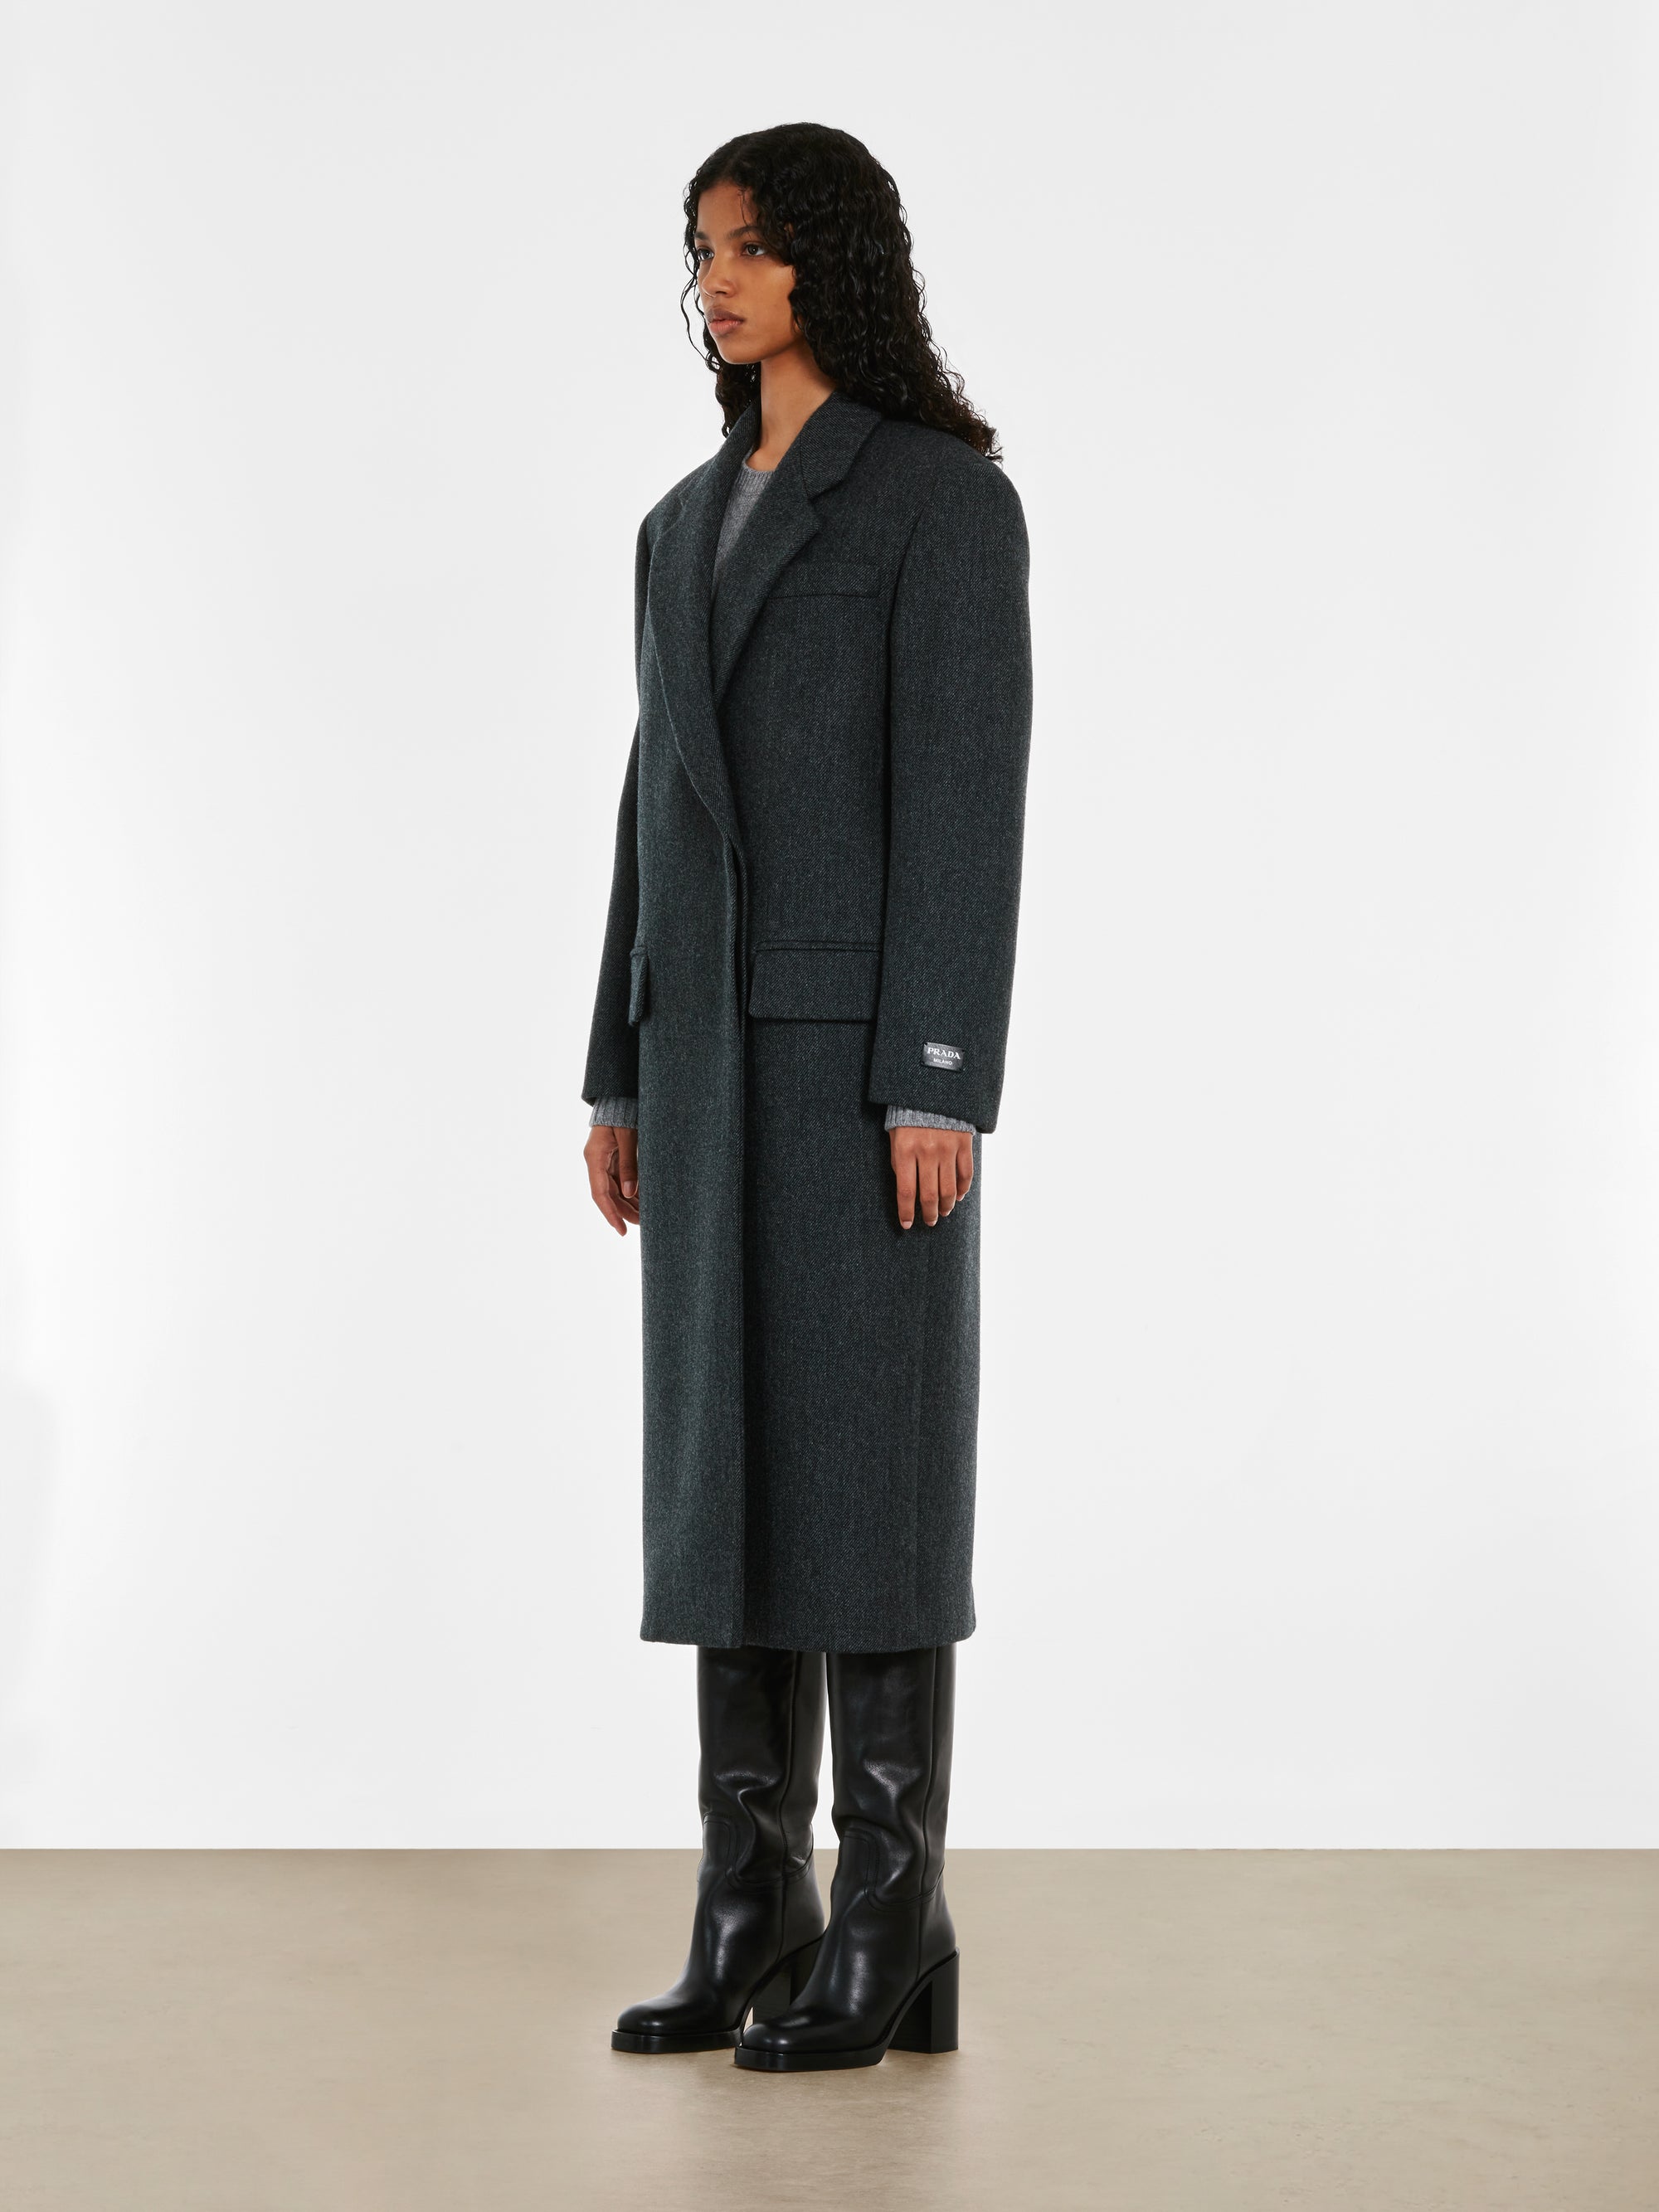 Prada - Women's Coat - (Grey) view 4